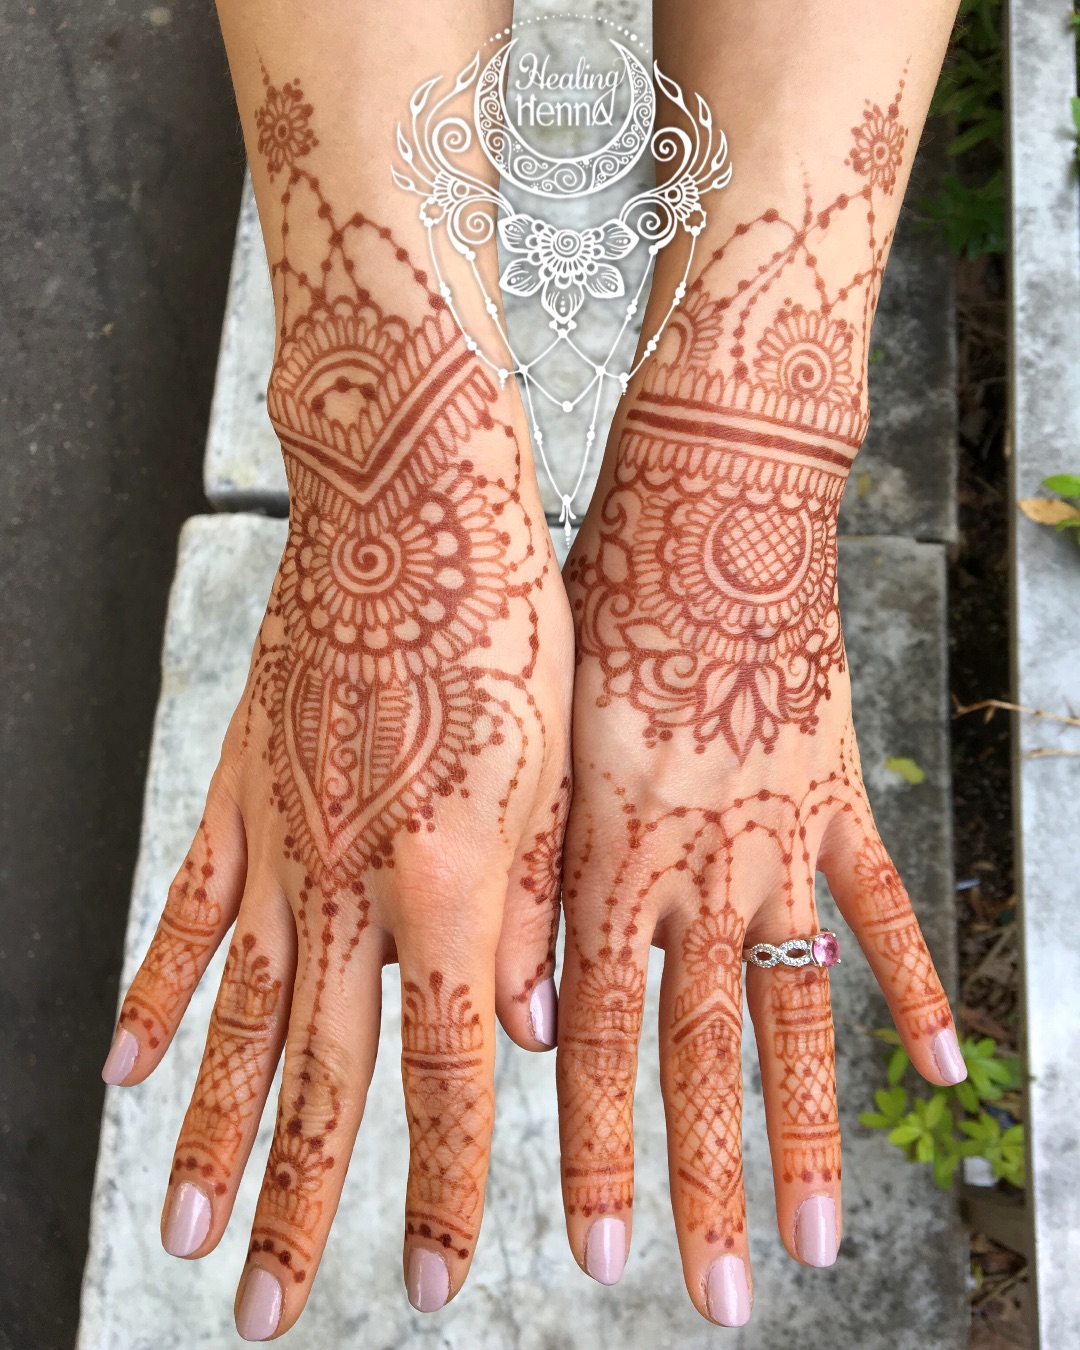 Healing Henna | Bridal Mehndi and Weddings